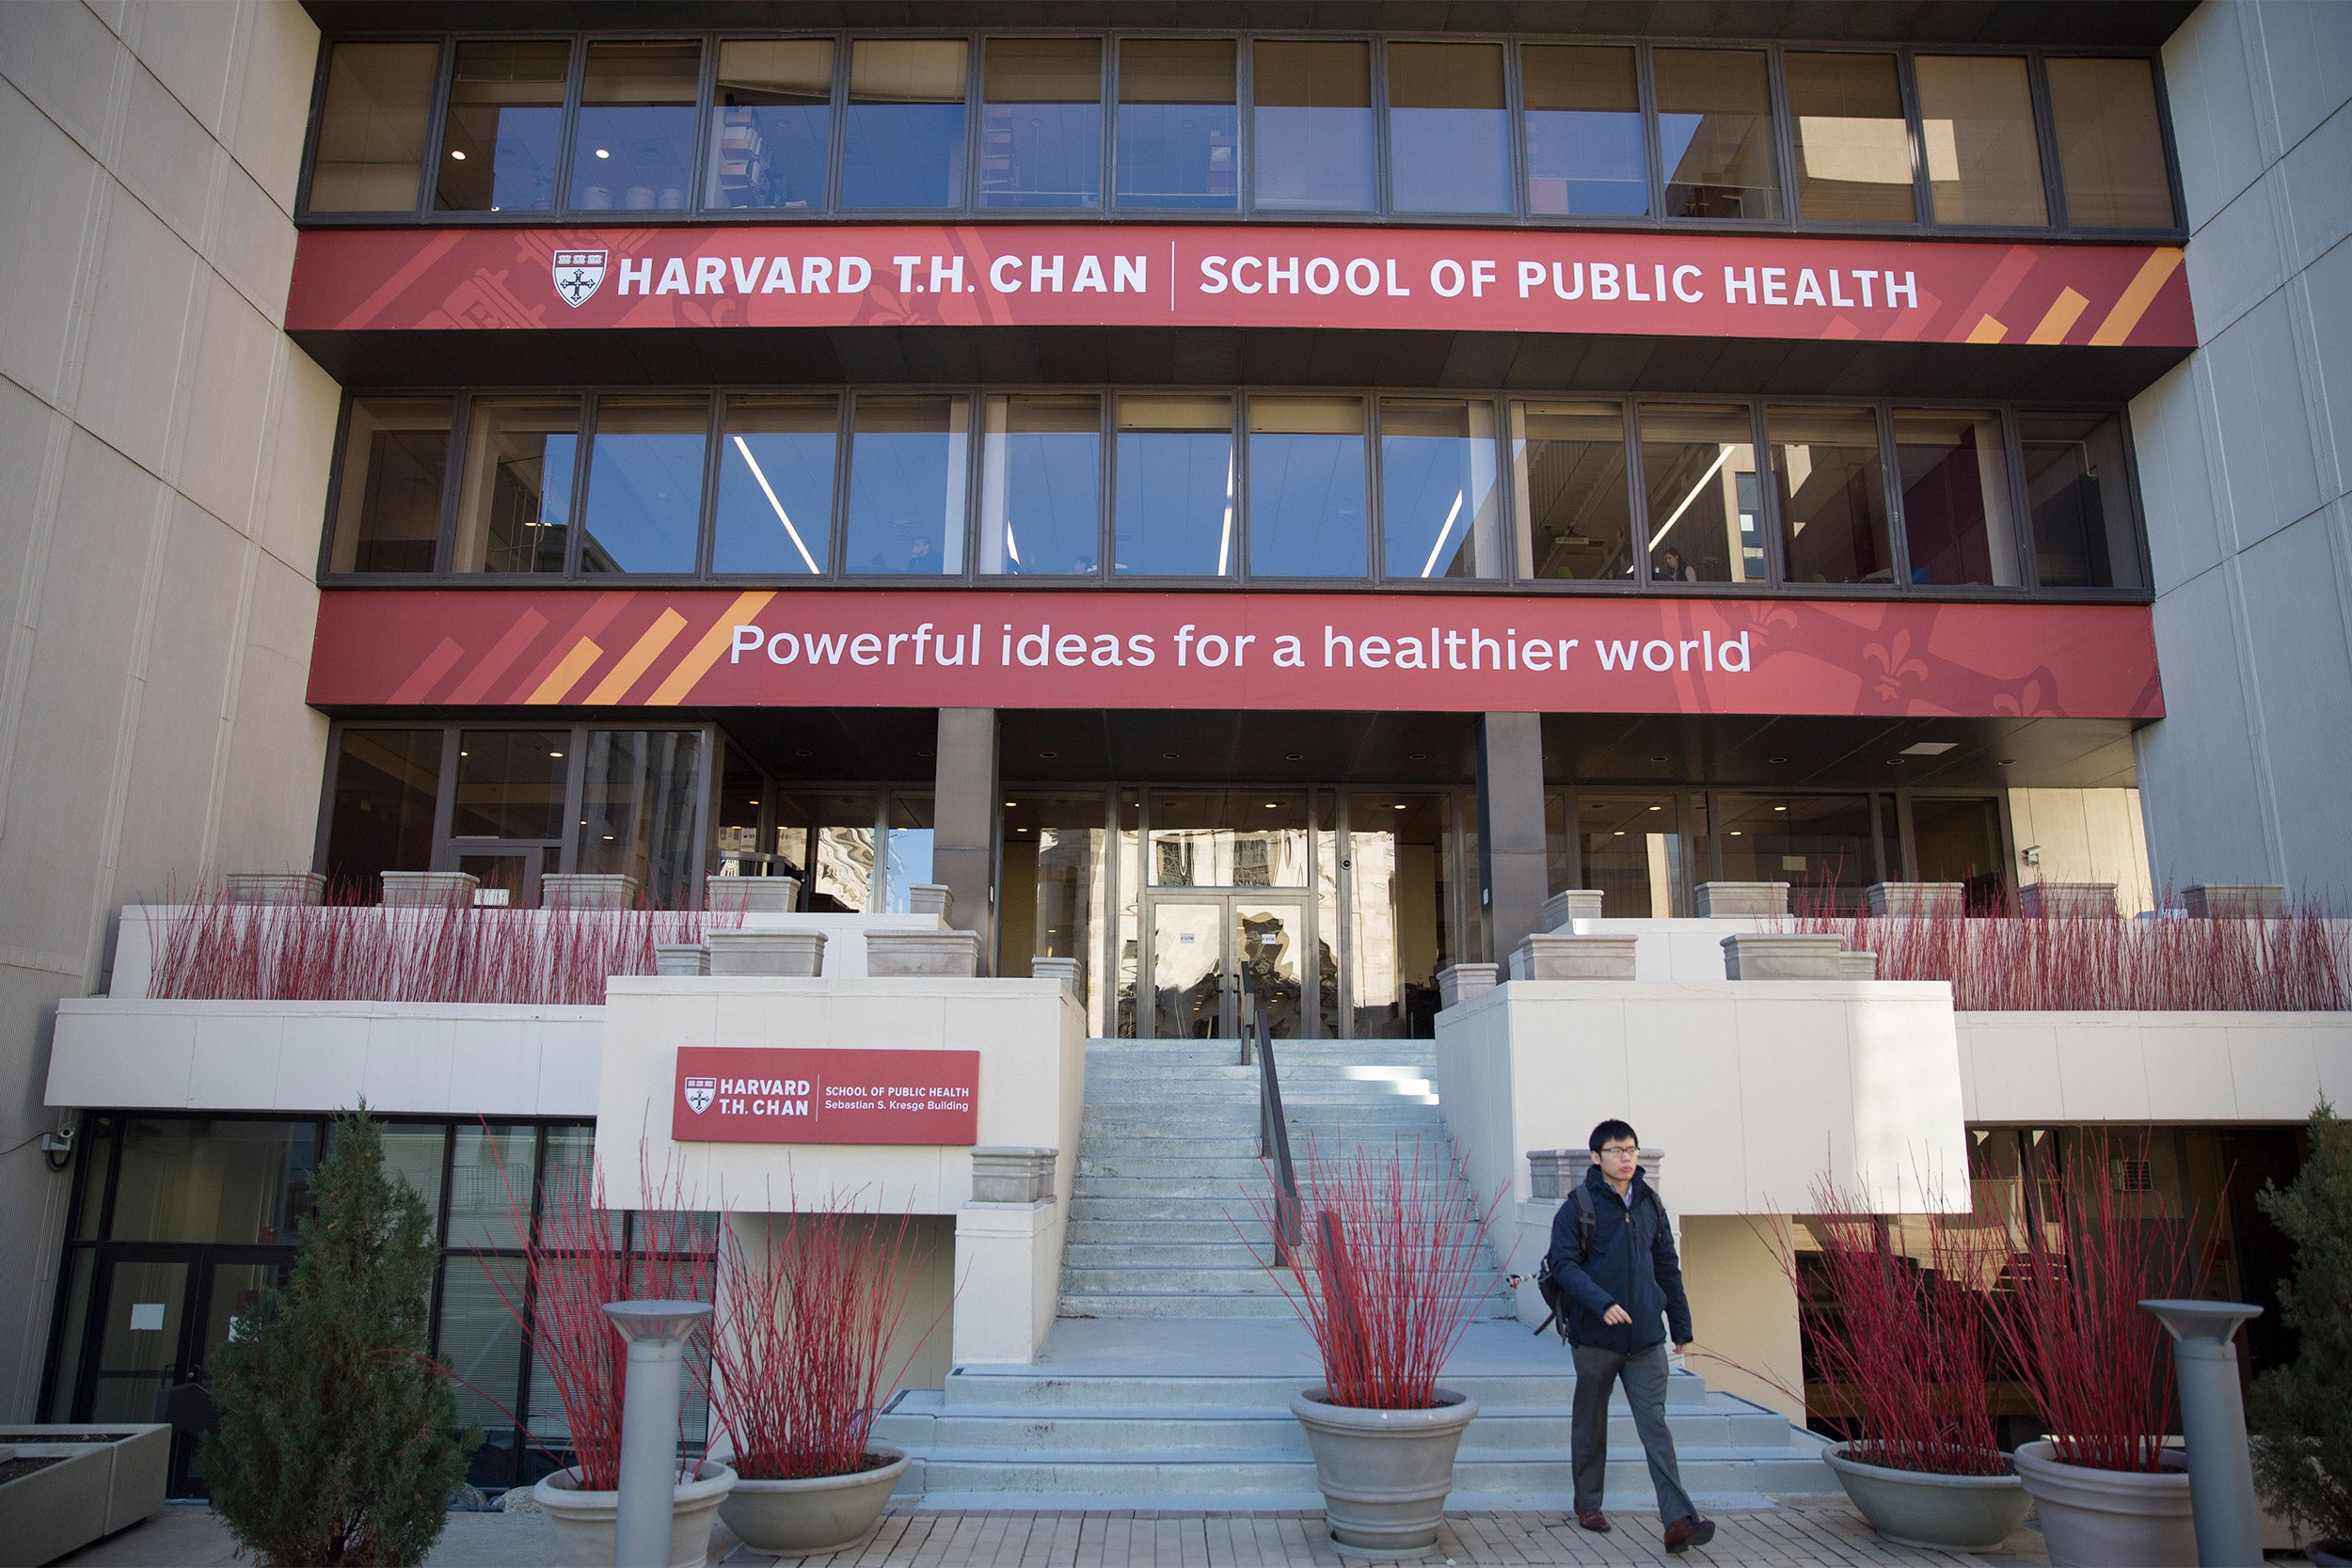 Harvard T.H. Chan School of Public Health.